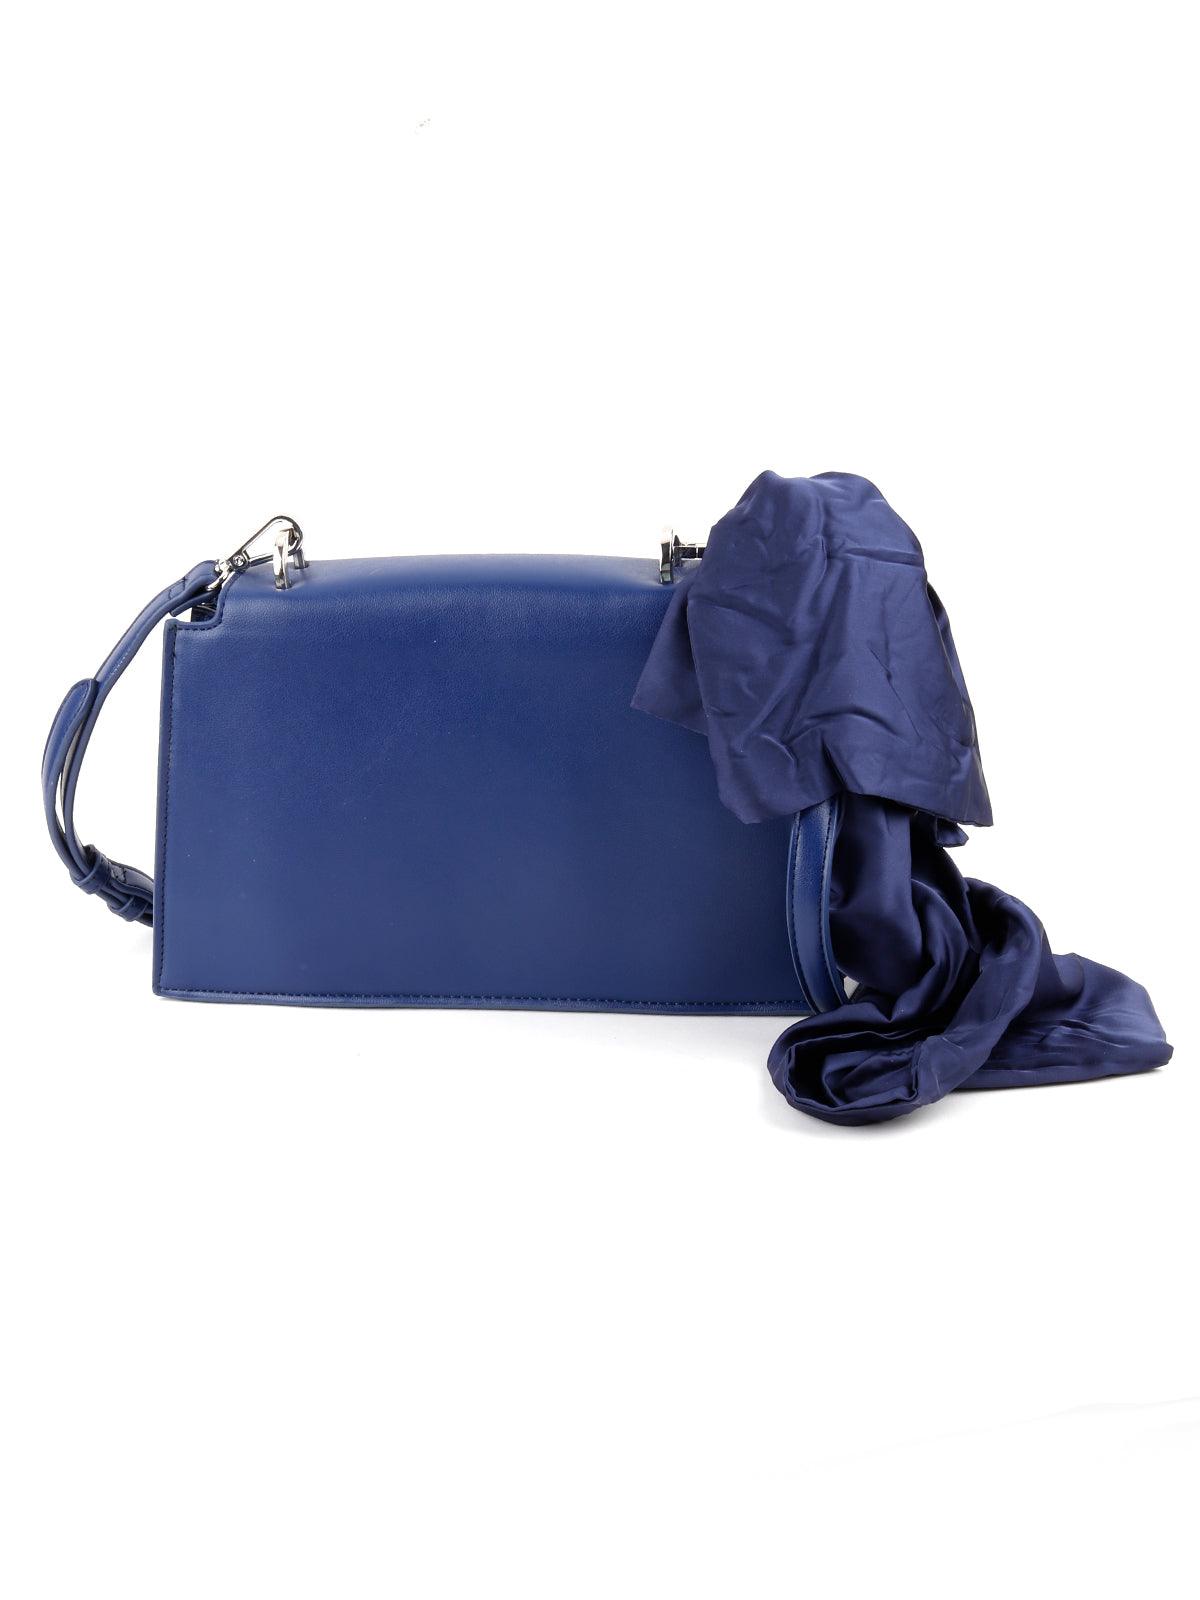 Bluish Purple Leather Bag - Odette